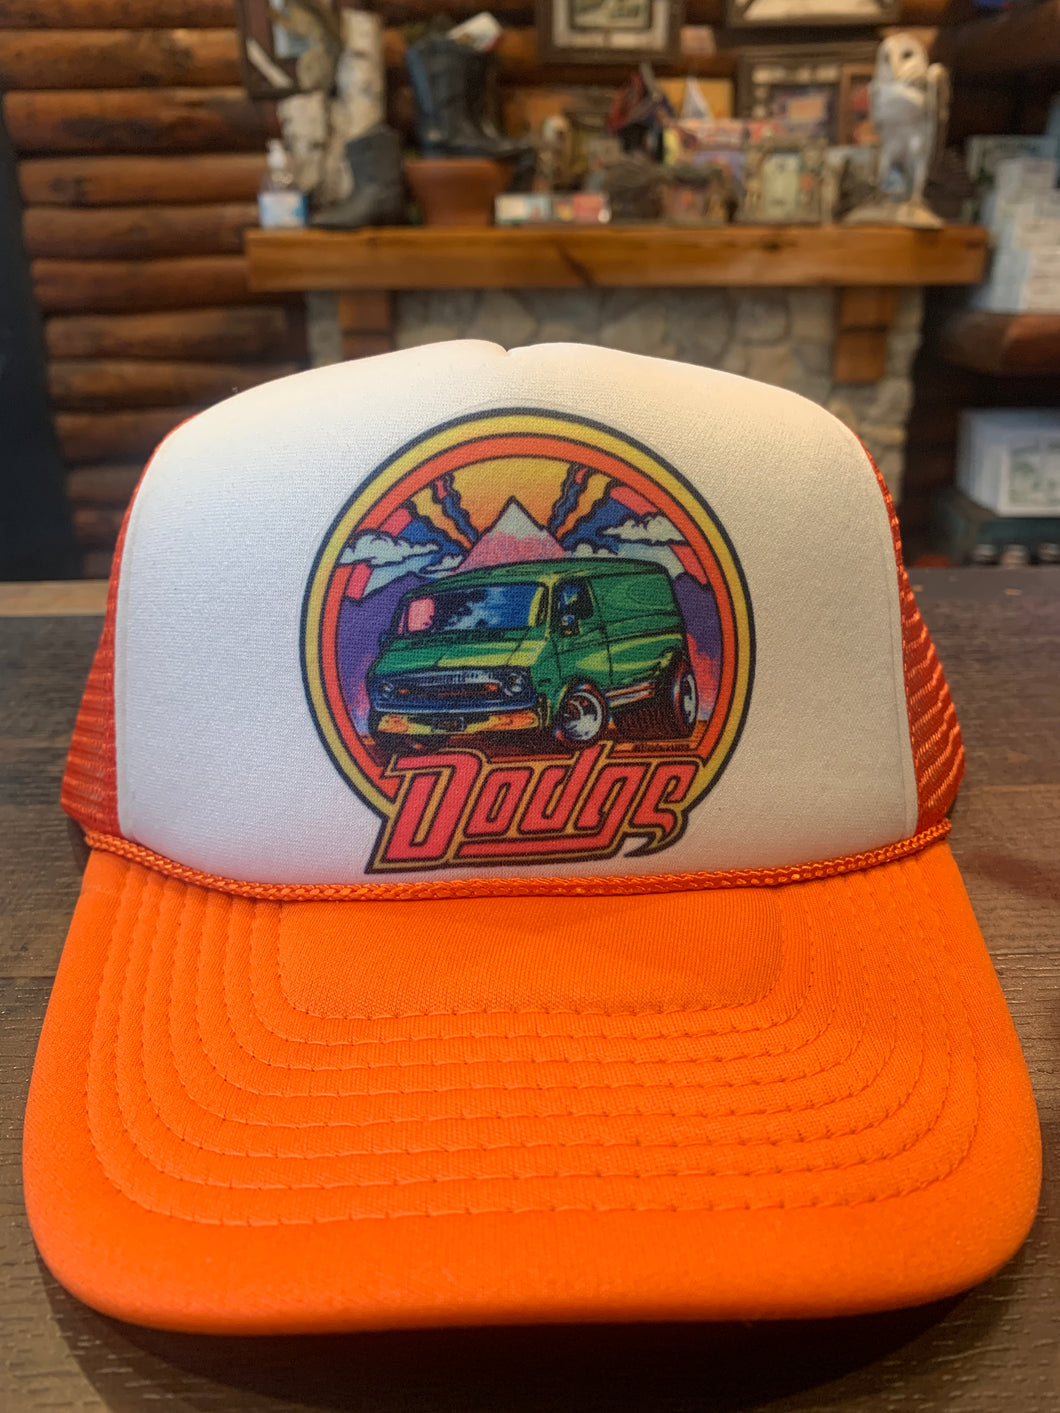 New Dodge Orange/Wh USA Trucker Cap